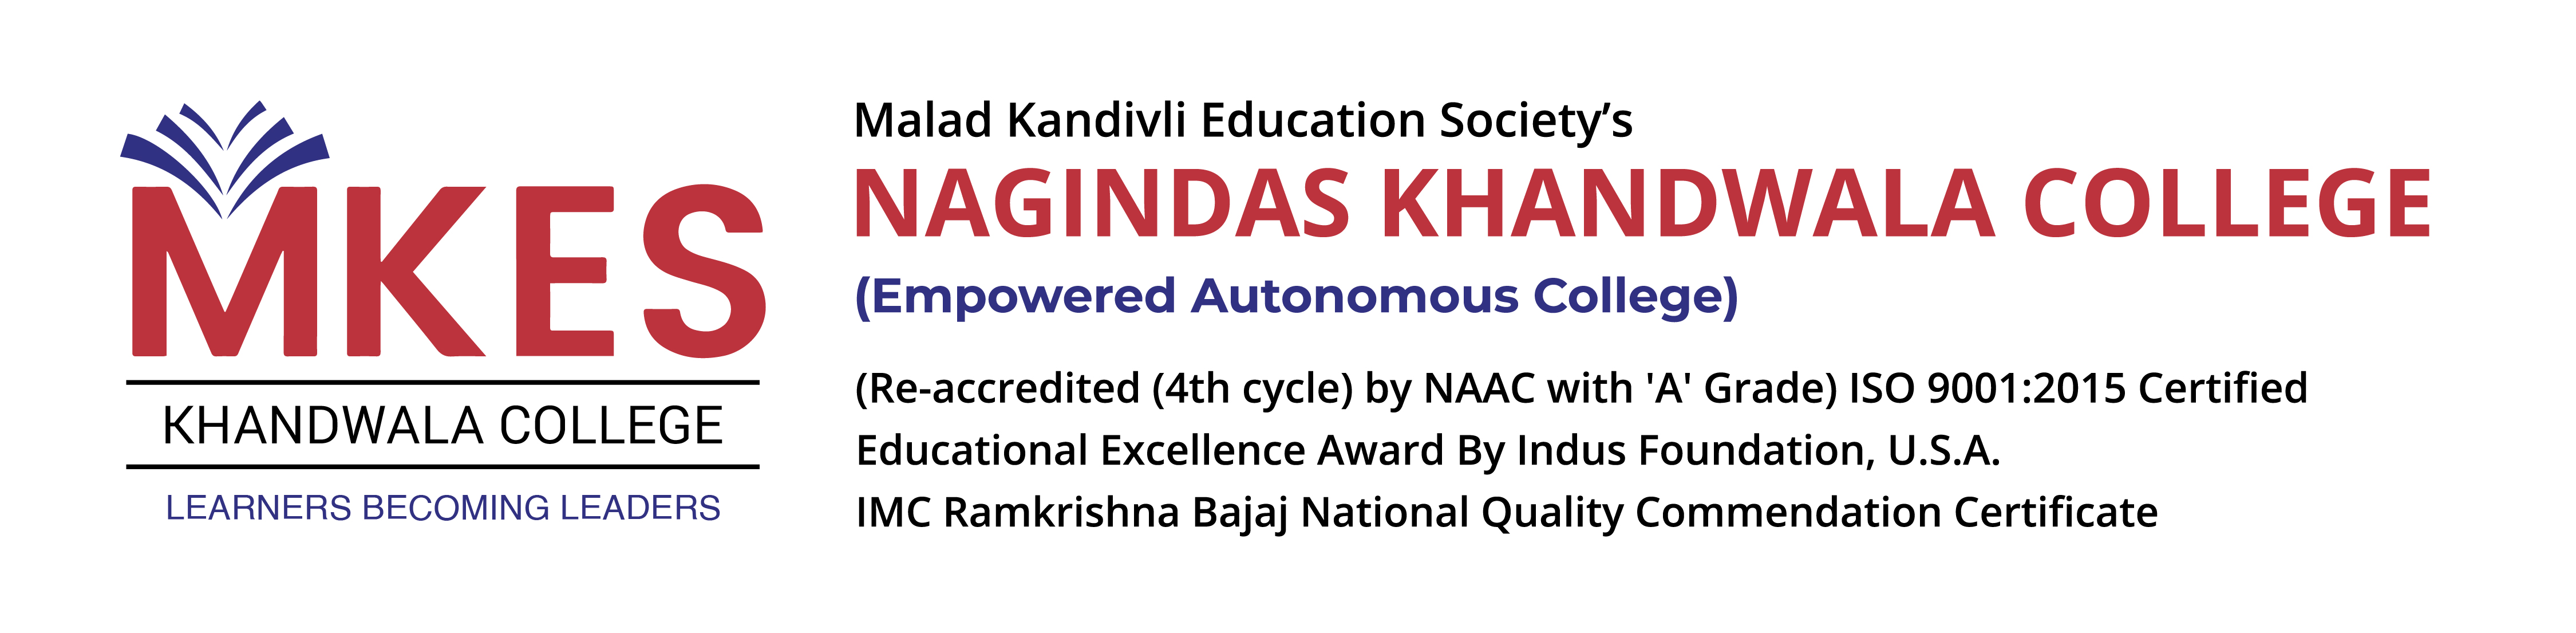 Nagindas Khandwala College for Masters Degree in Sports Management